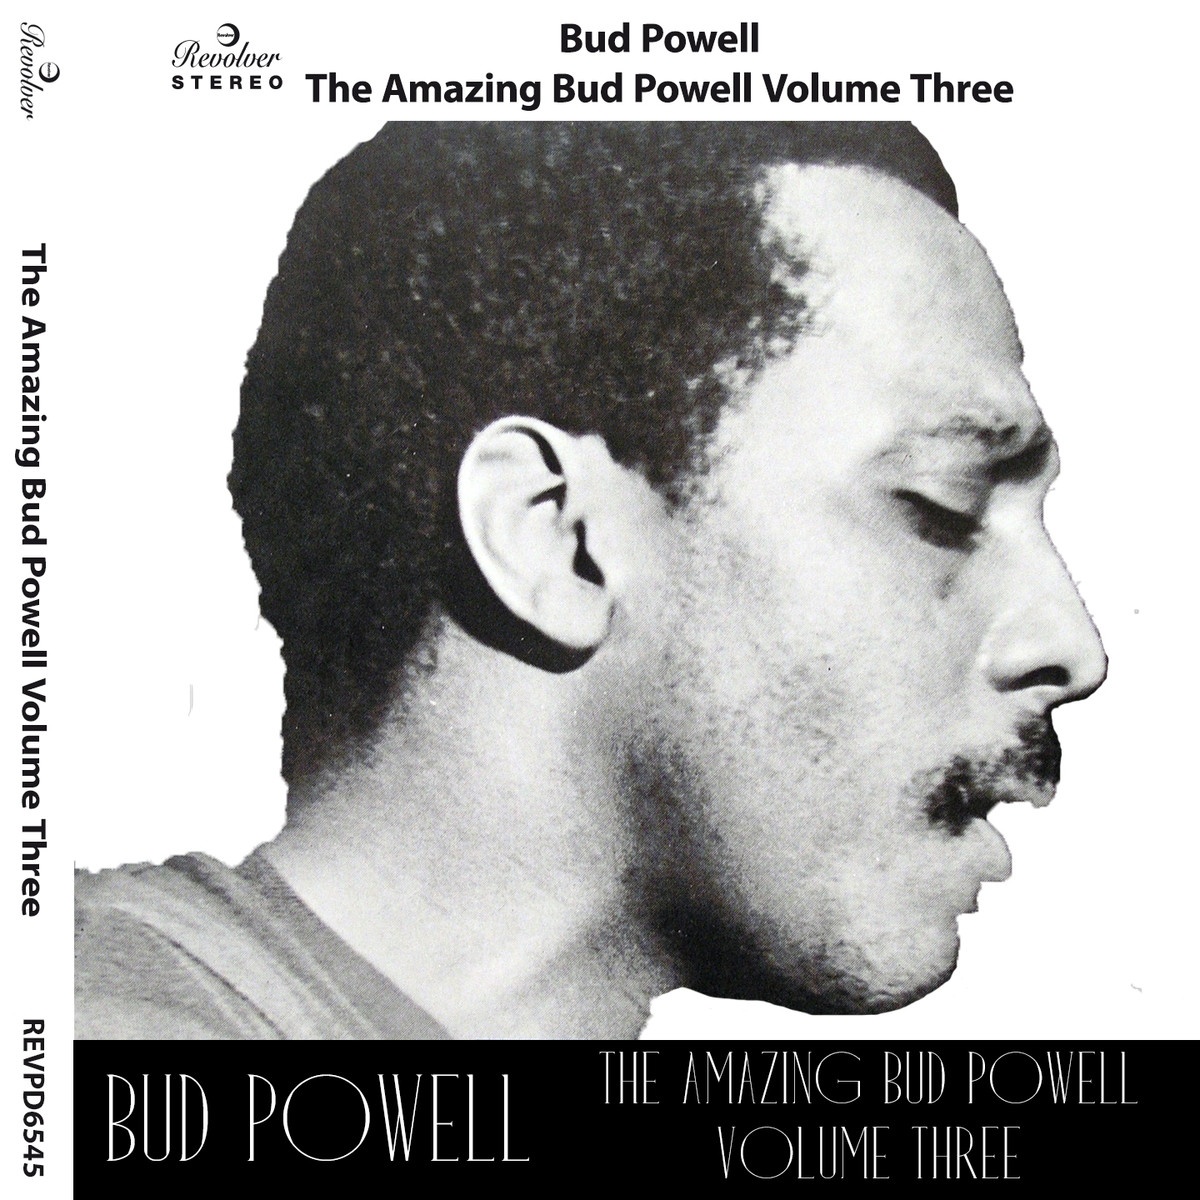 The Amazing Bud Powell, Vol. 3